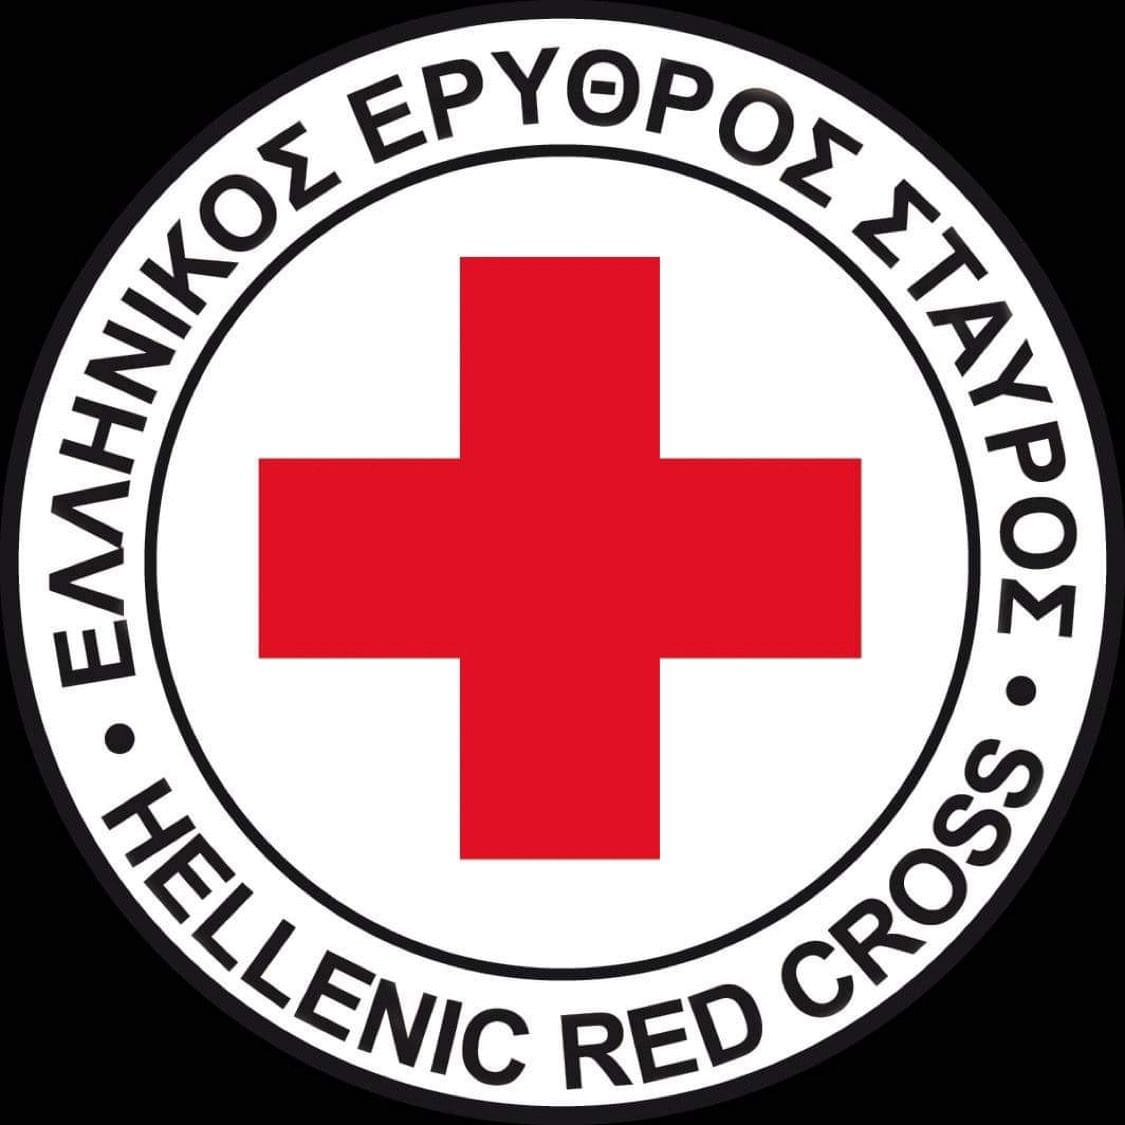 Eordaialive.com - Τα Νέα της Πτολεμαΐδας, Εορδαίας, Κοζάνης Έκκληση για αίμα απευθύνει το Περιφερειακό Τμήμα του Ελληνικού Ερυθρού Σταυρού Πτολεμαΐδας, προς τους συμπολίτες μας .